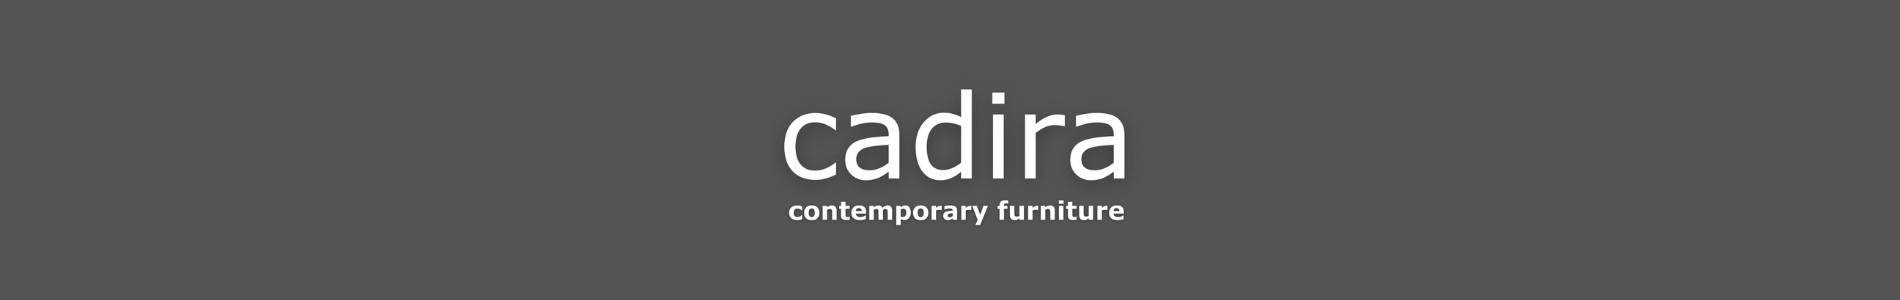 Cadira Contemporary Furniture